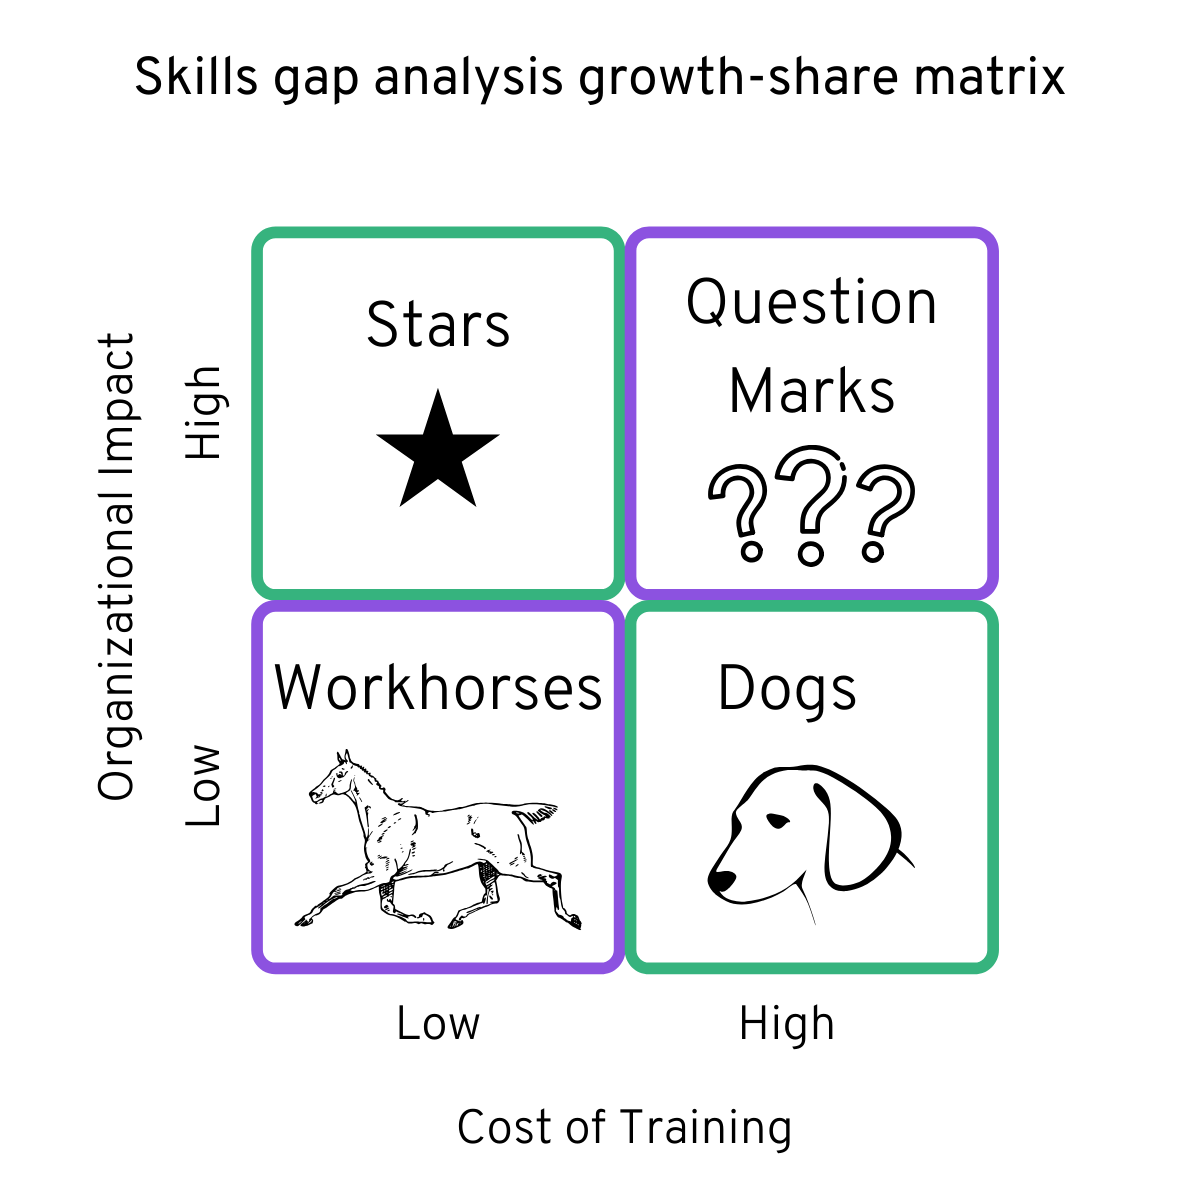 skills gap analysis growth-share matrix